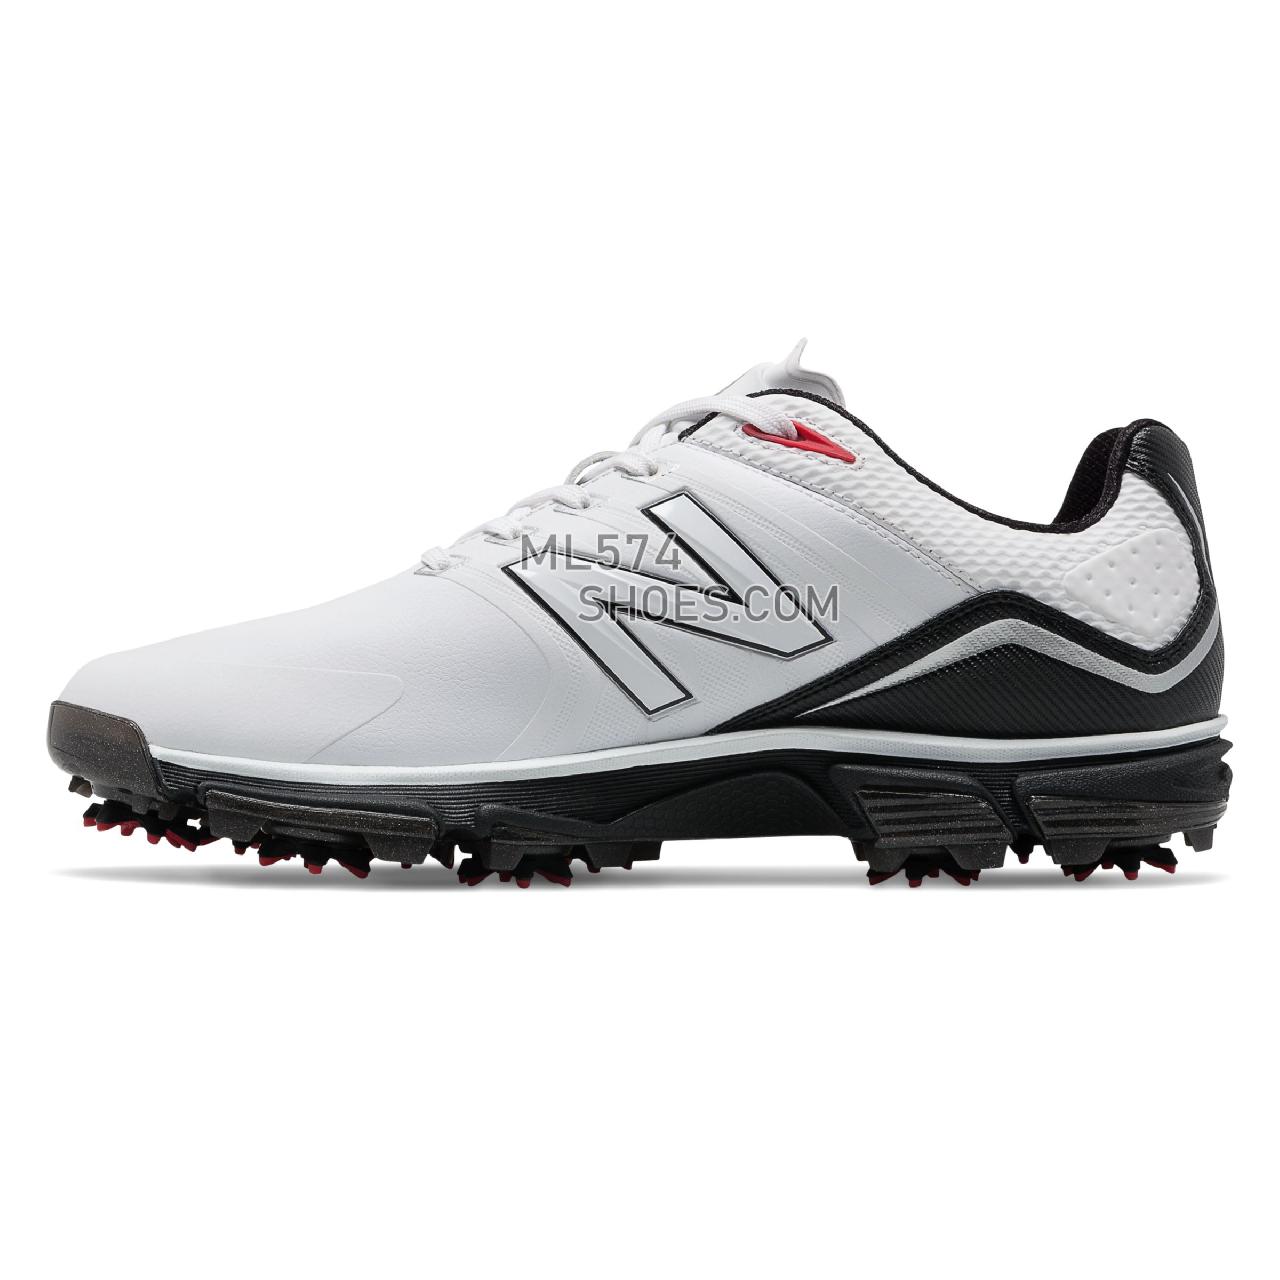 New Balance NB Tour - Men's Golf - White with Black - NBG3001WK